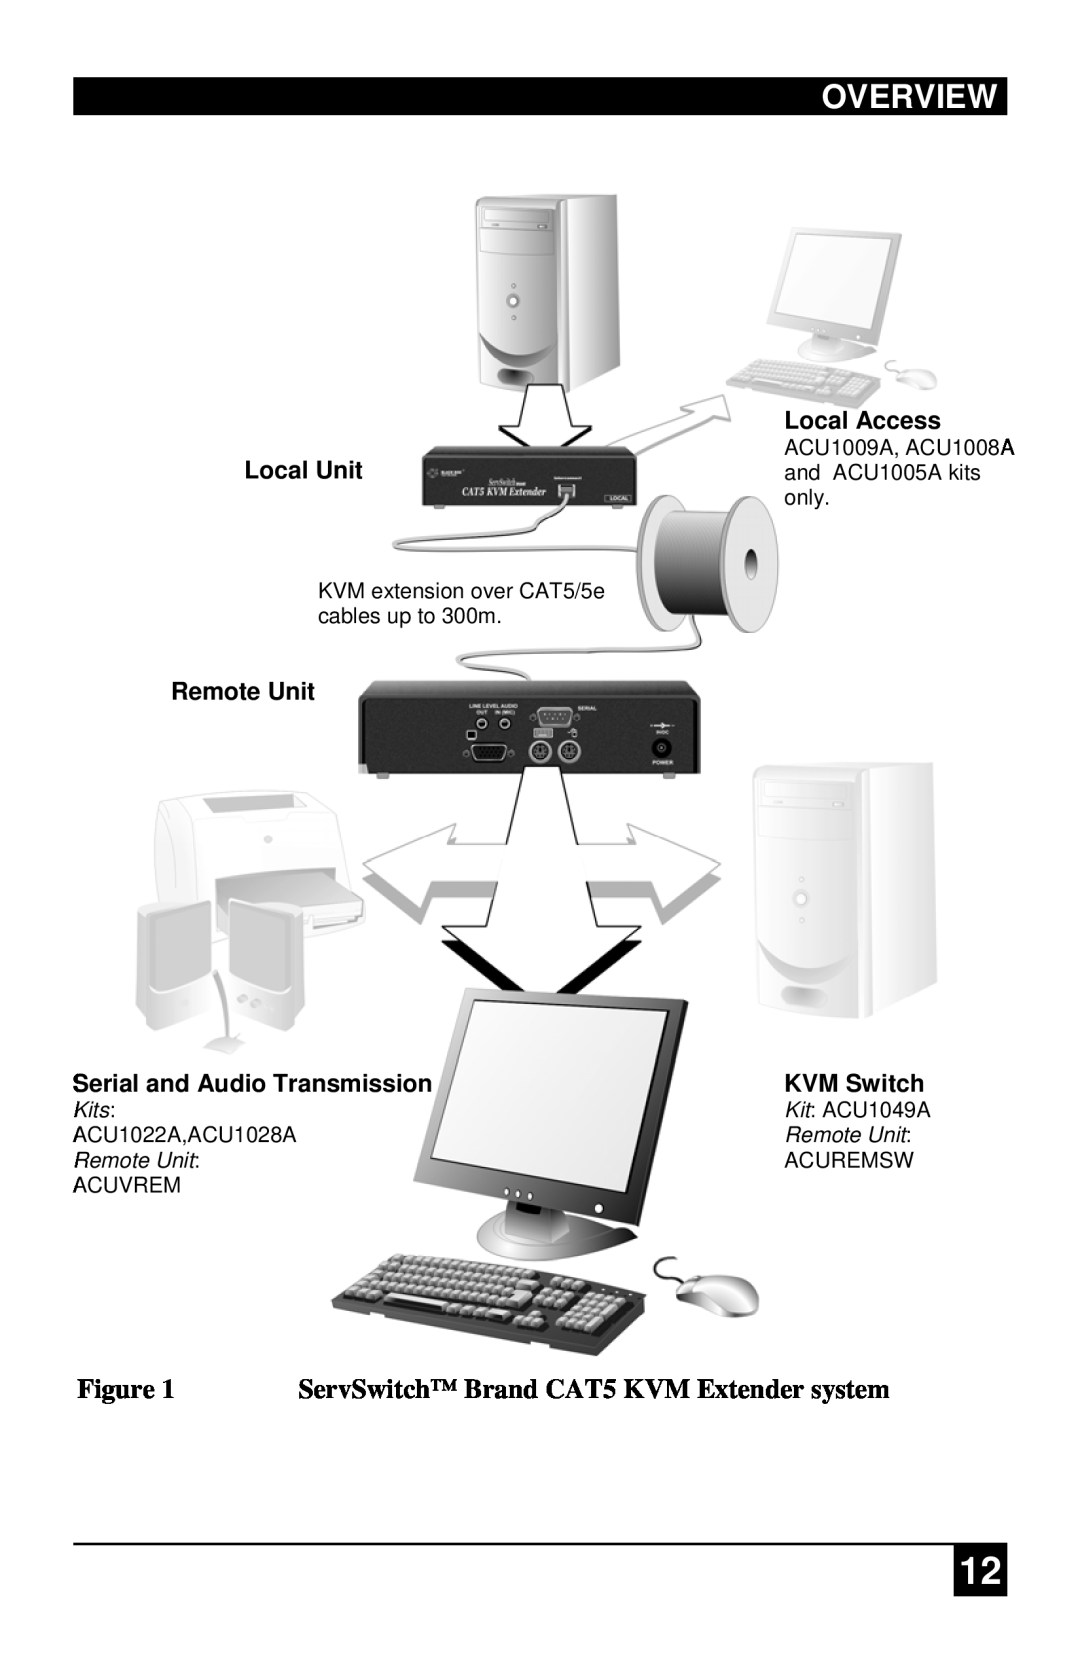 Black Box ACU1049A manual Overview, ServSwitch Brand CAT5 KVM Extender system, Local Access, Remote Unit, KVM Switch, Kits 